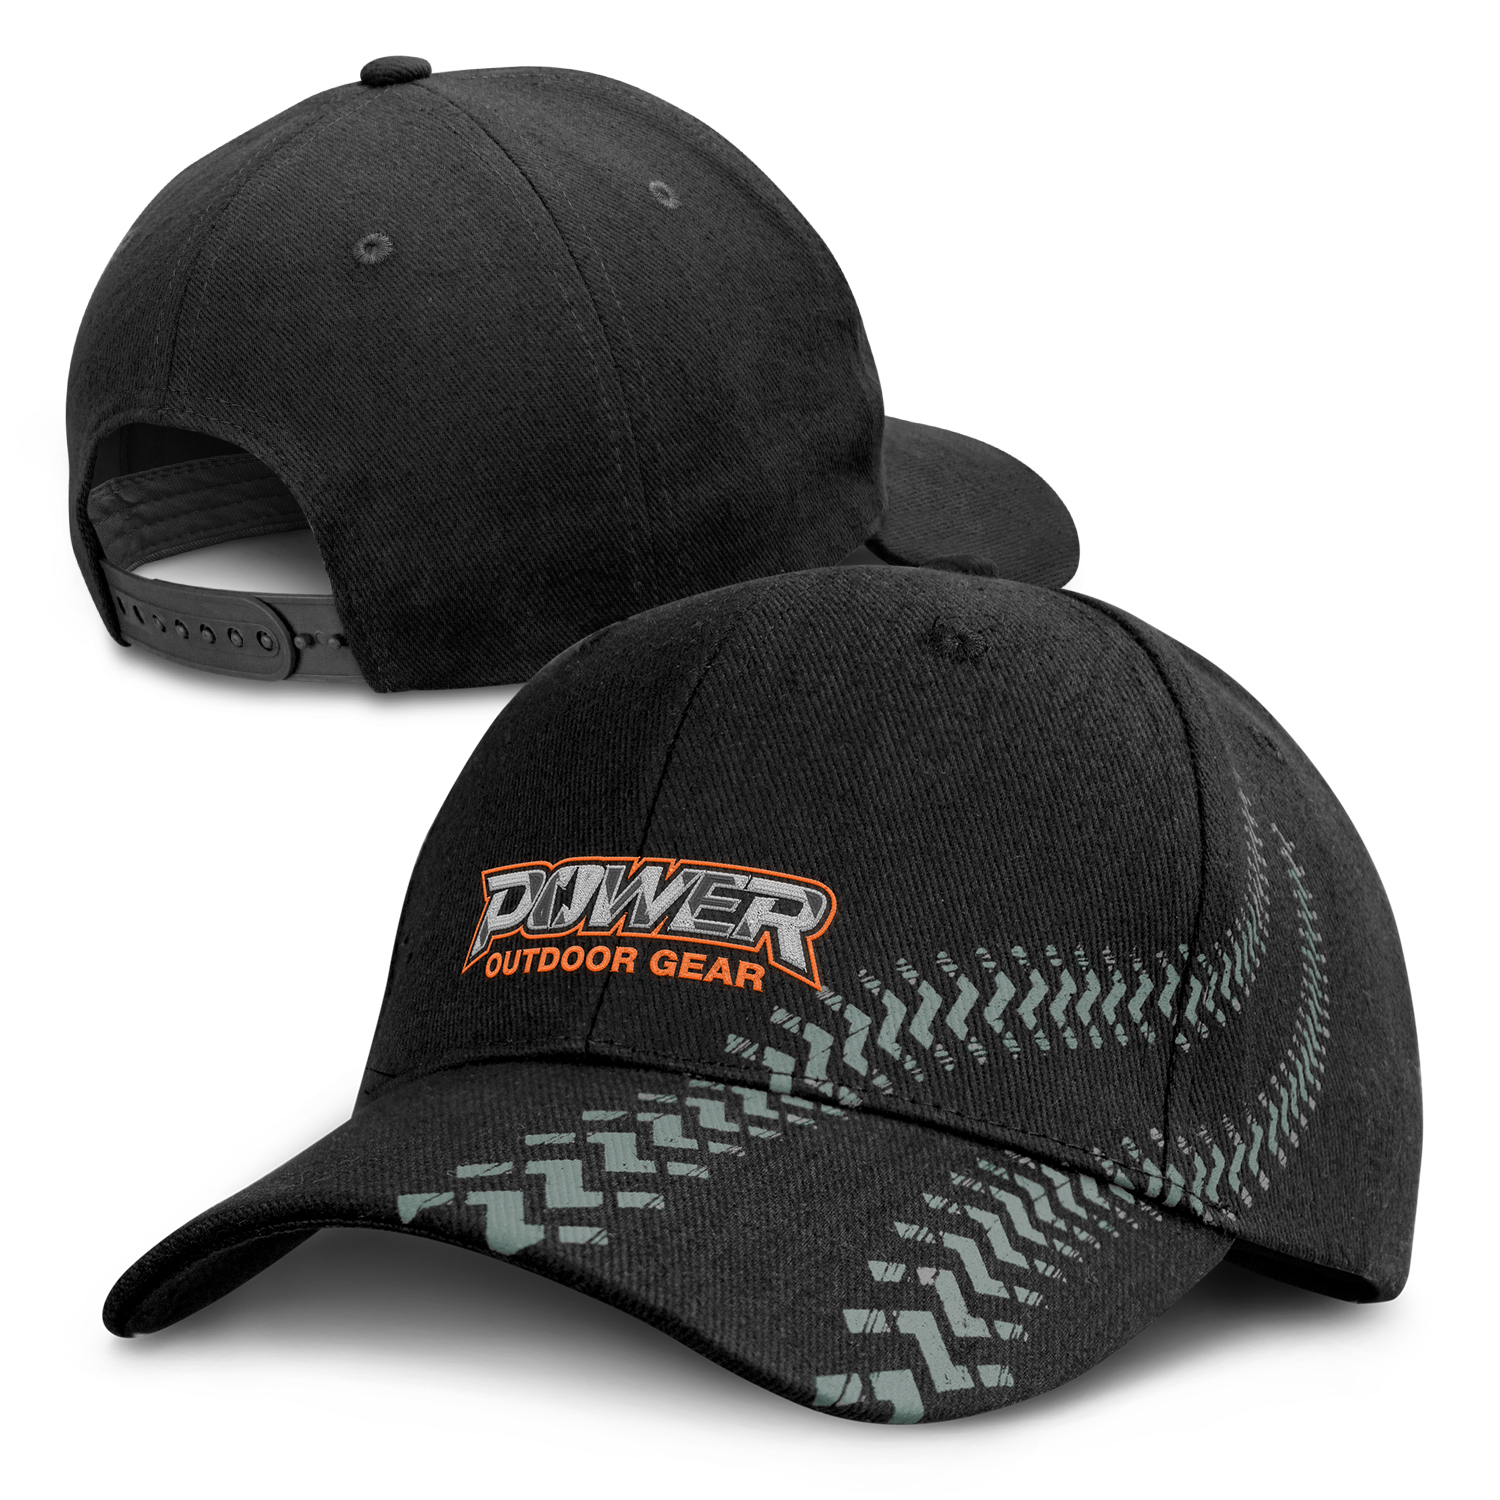 Headwear Express Westwood Cap cap